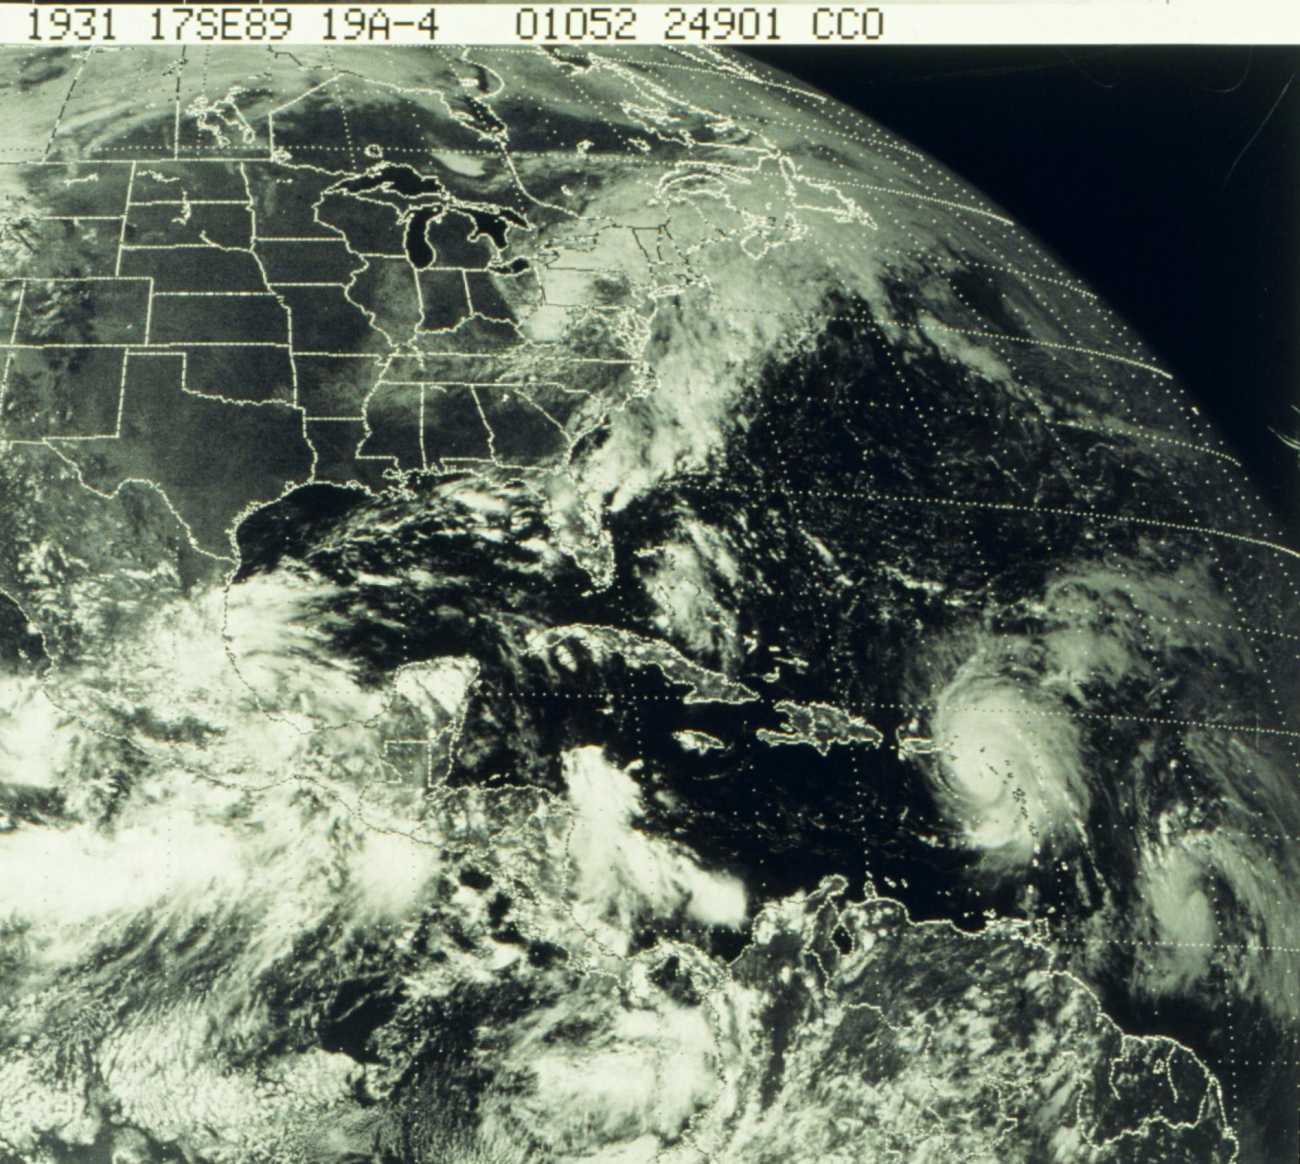 GOES imagery of Hurricane Hugo passing over U